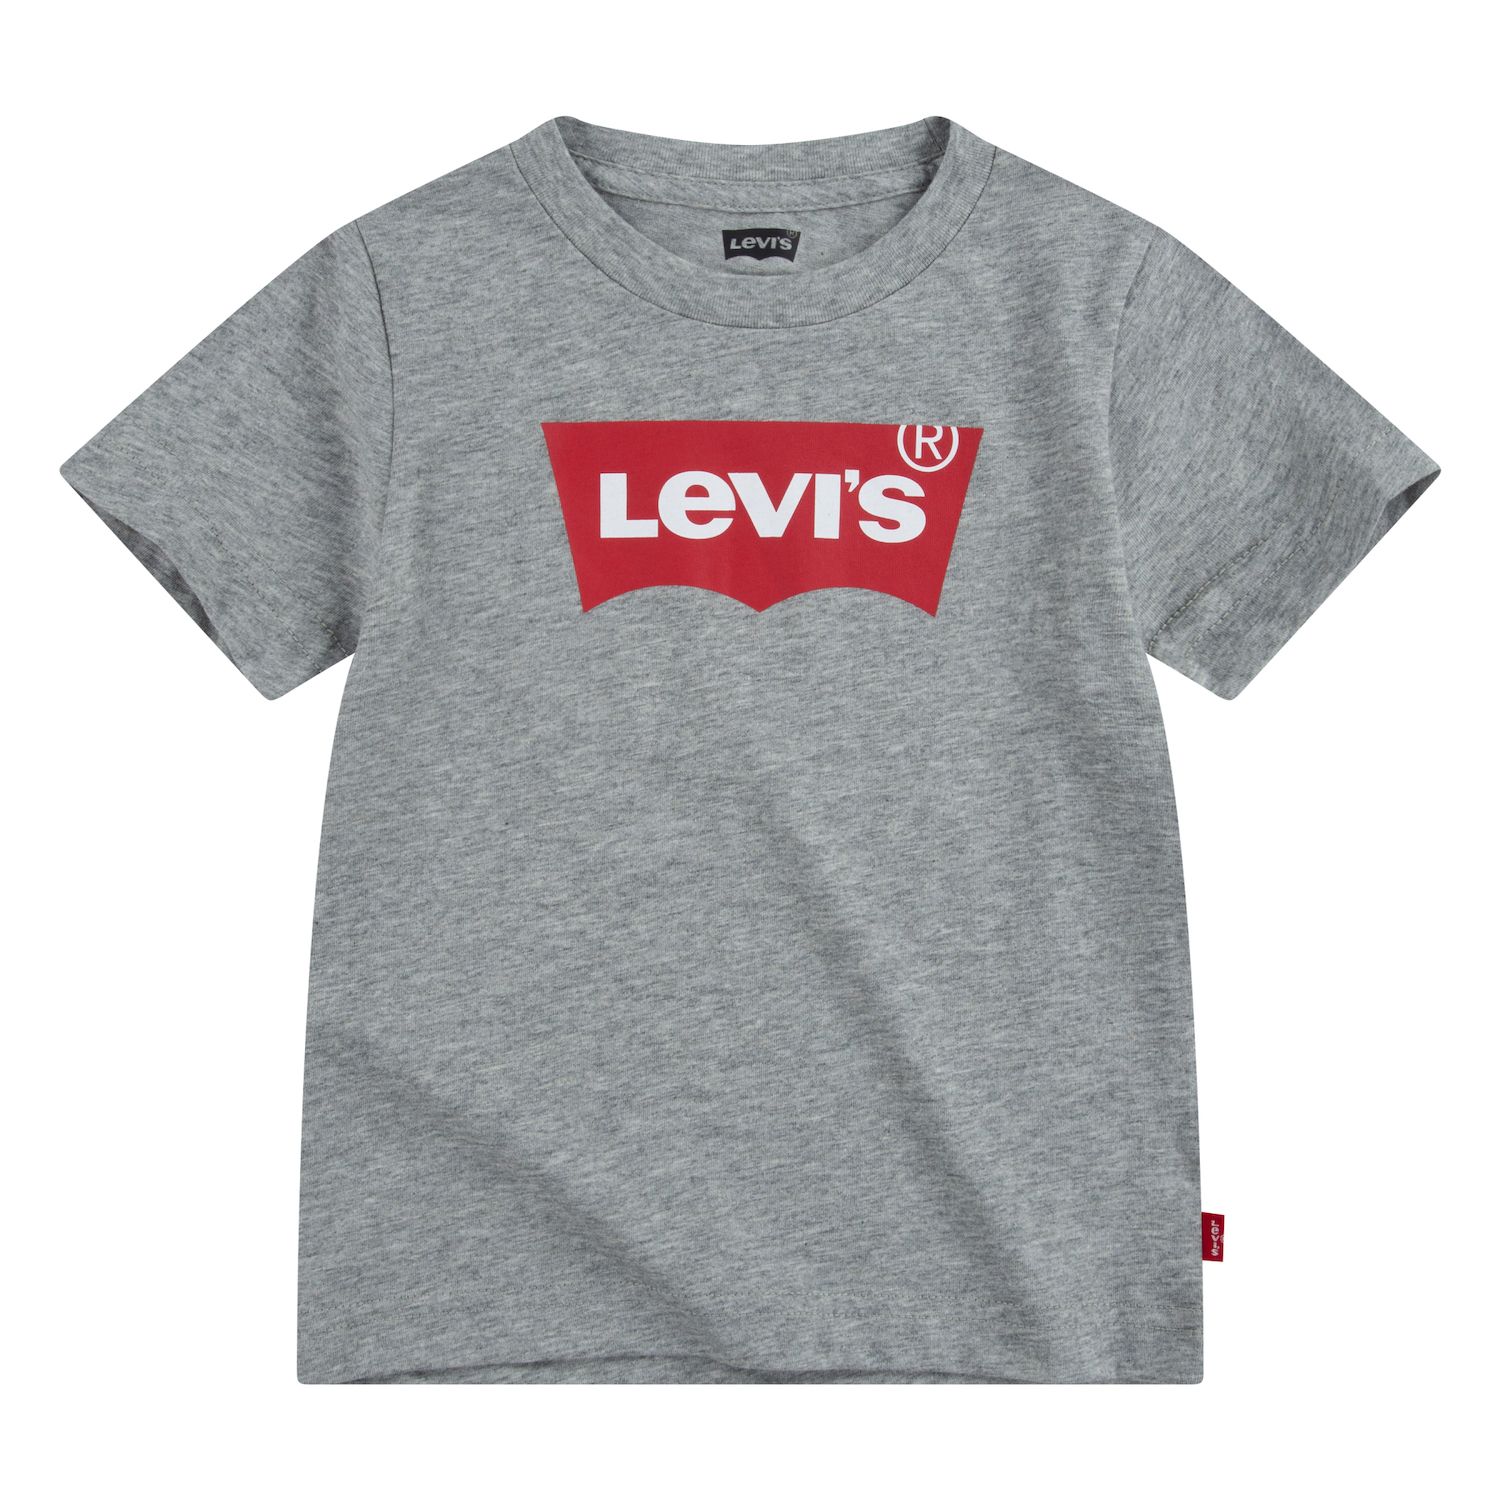 children's levi t shirt